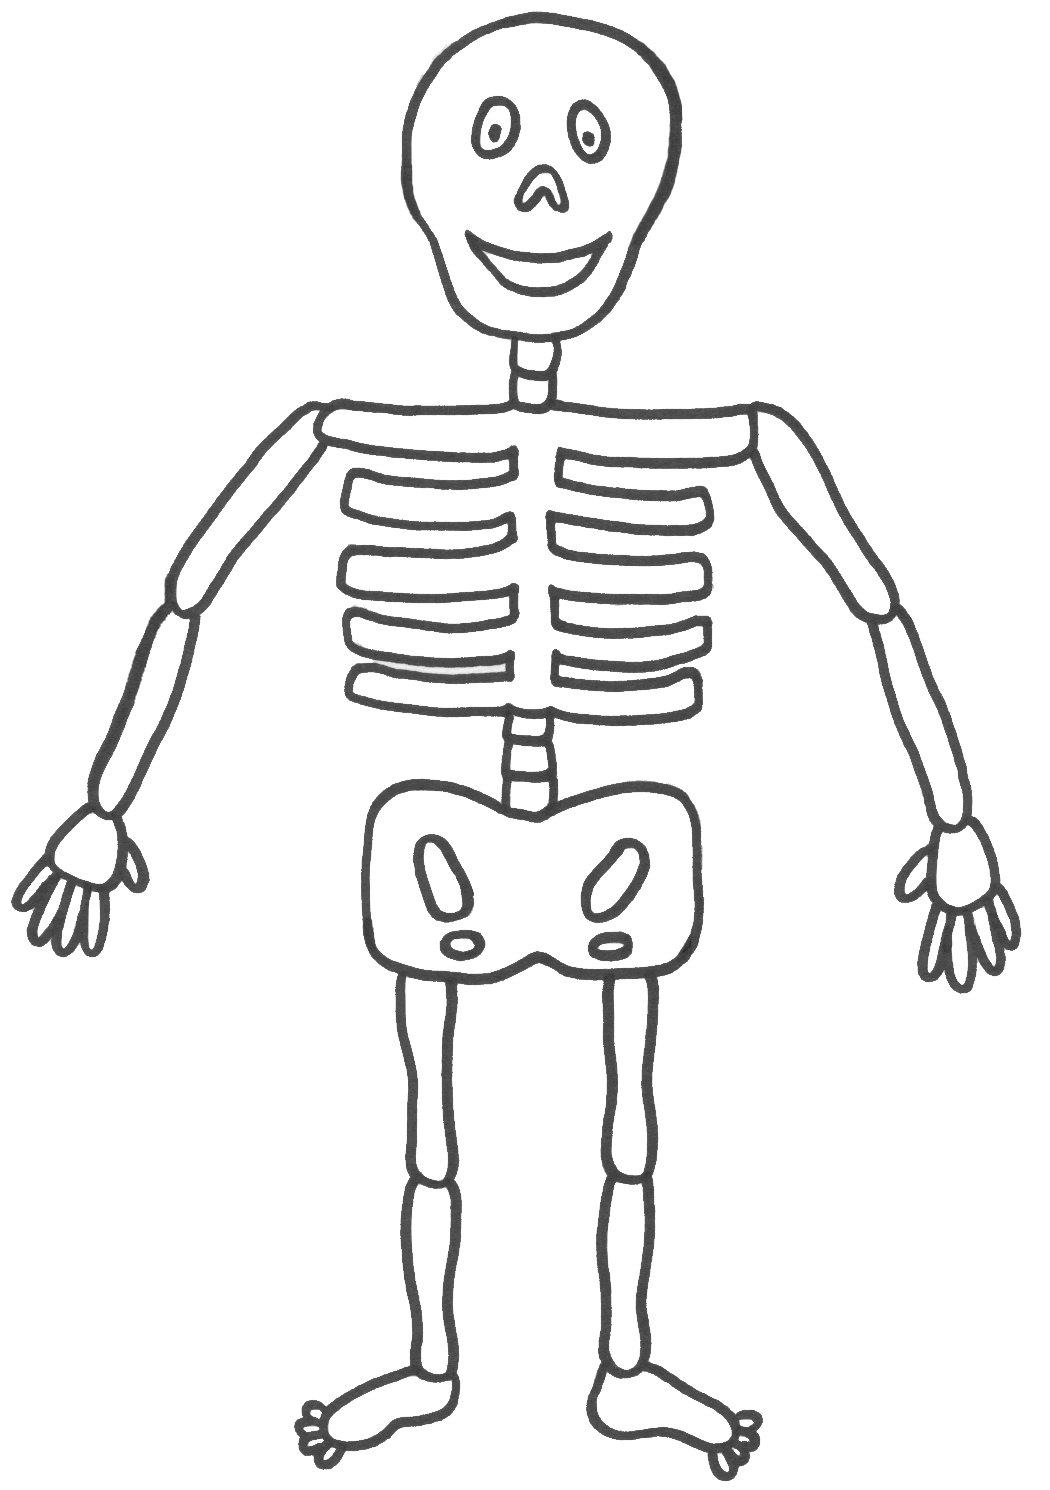 Skeleton pencil and in. Bones clipart simple